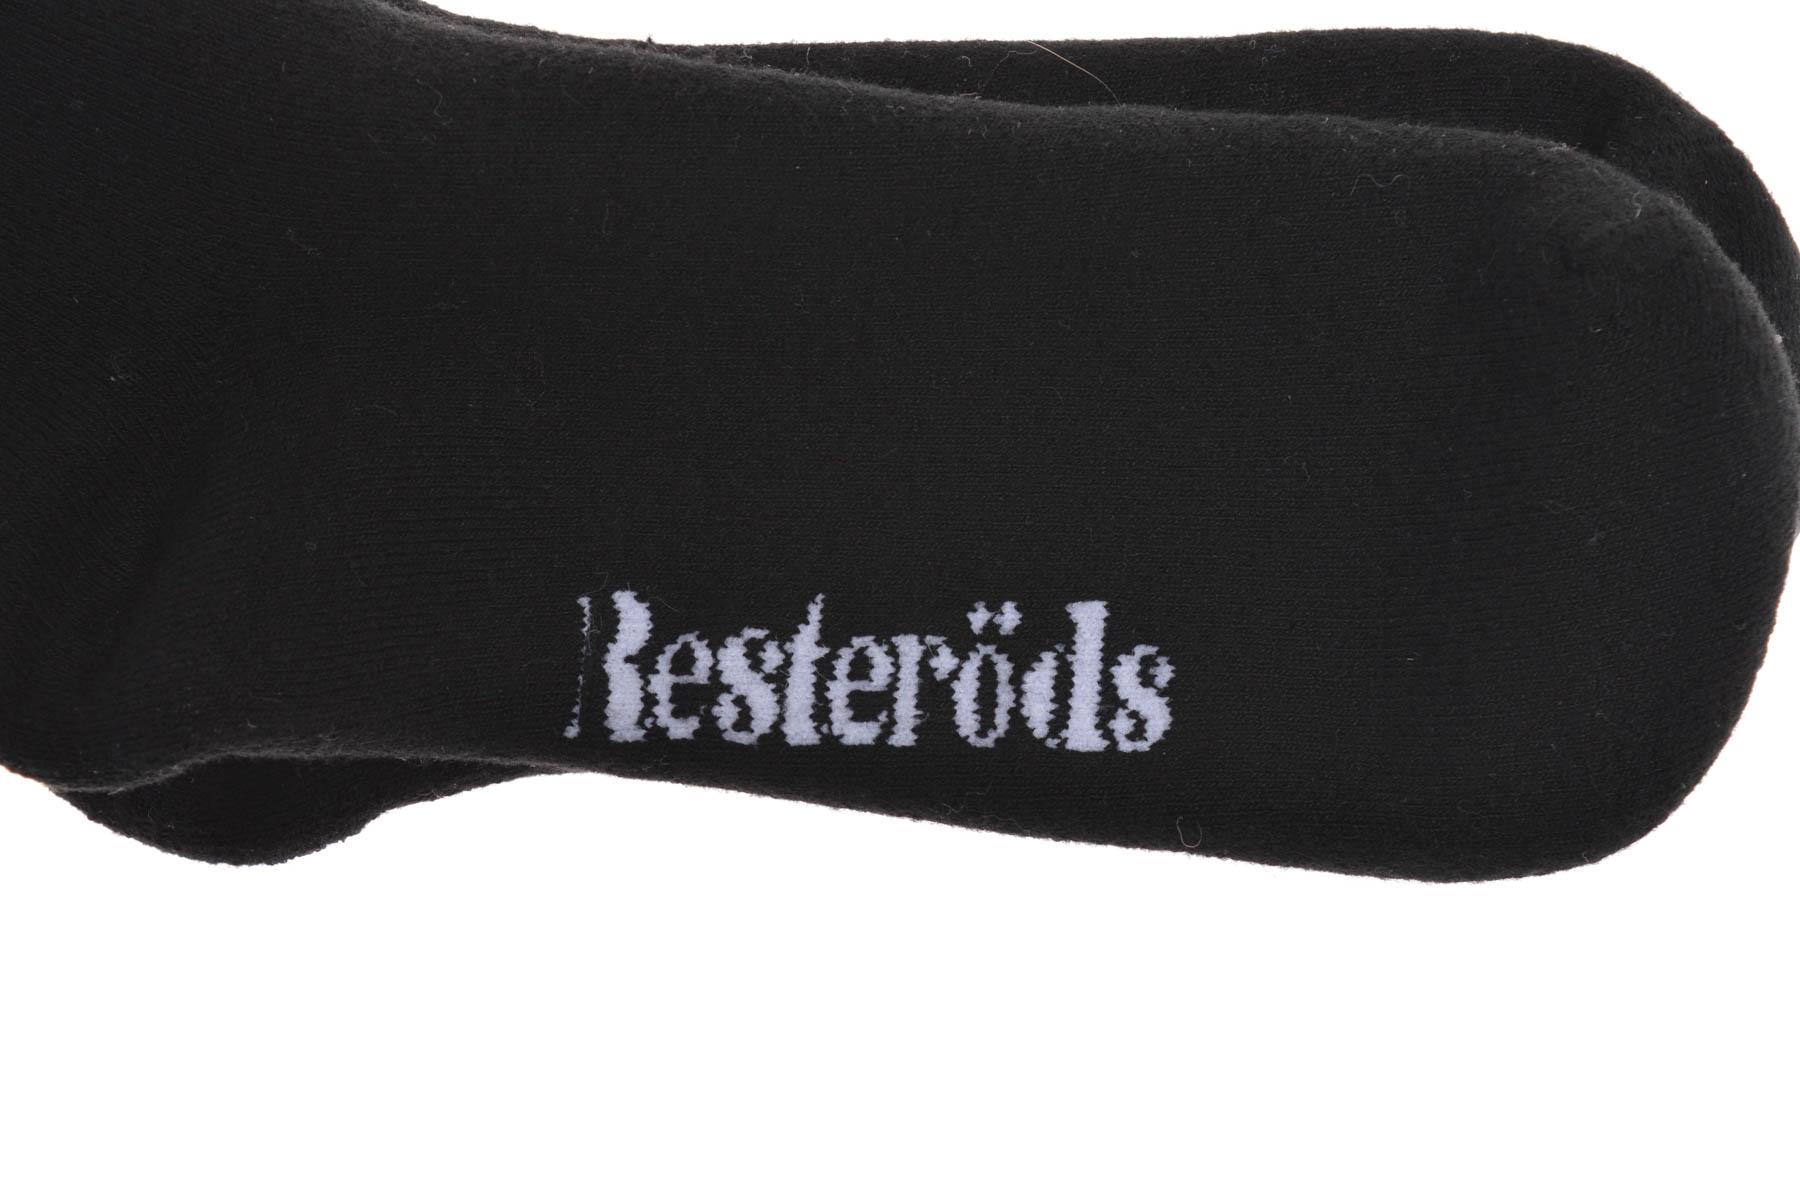 Women's Socks - Resterods - 1